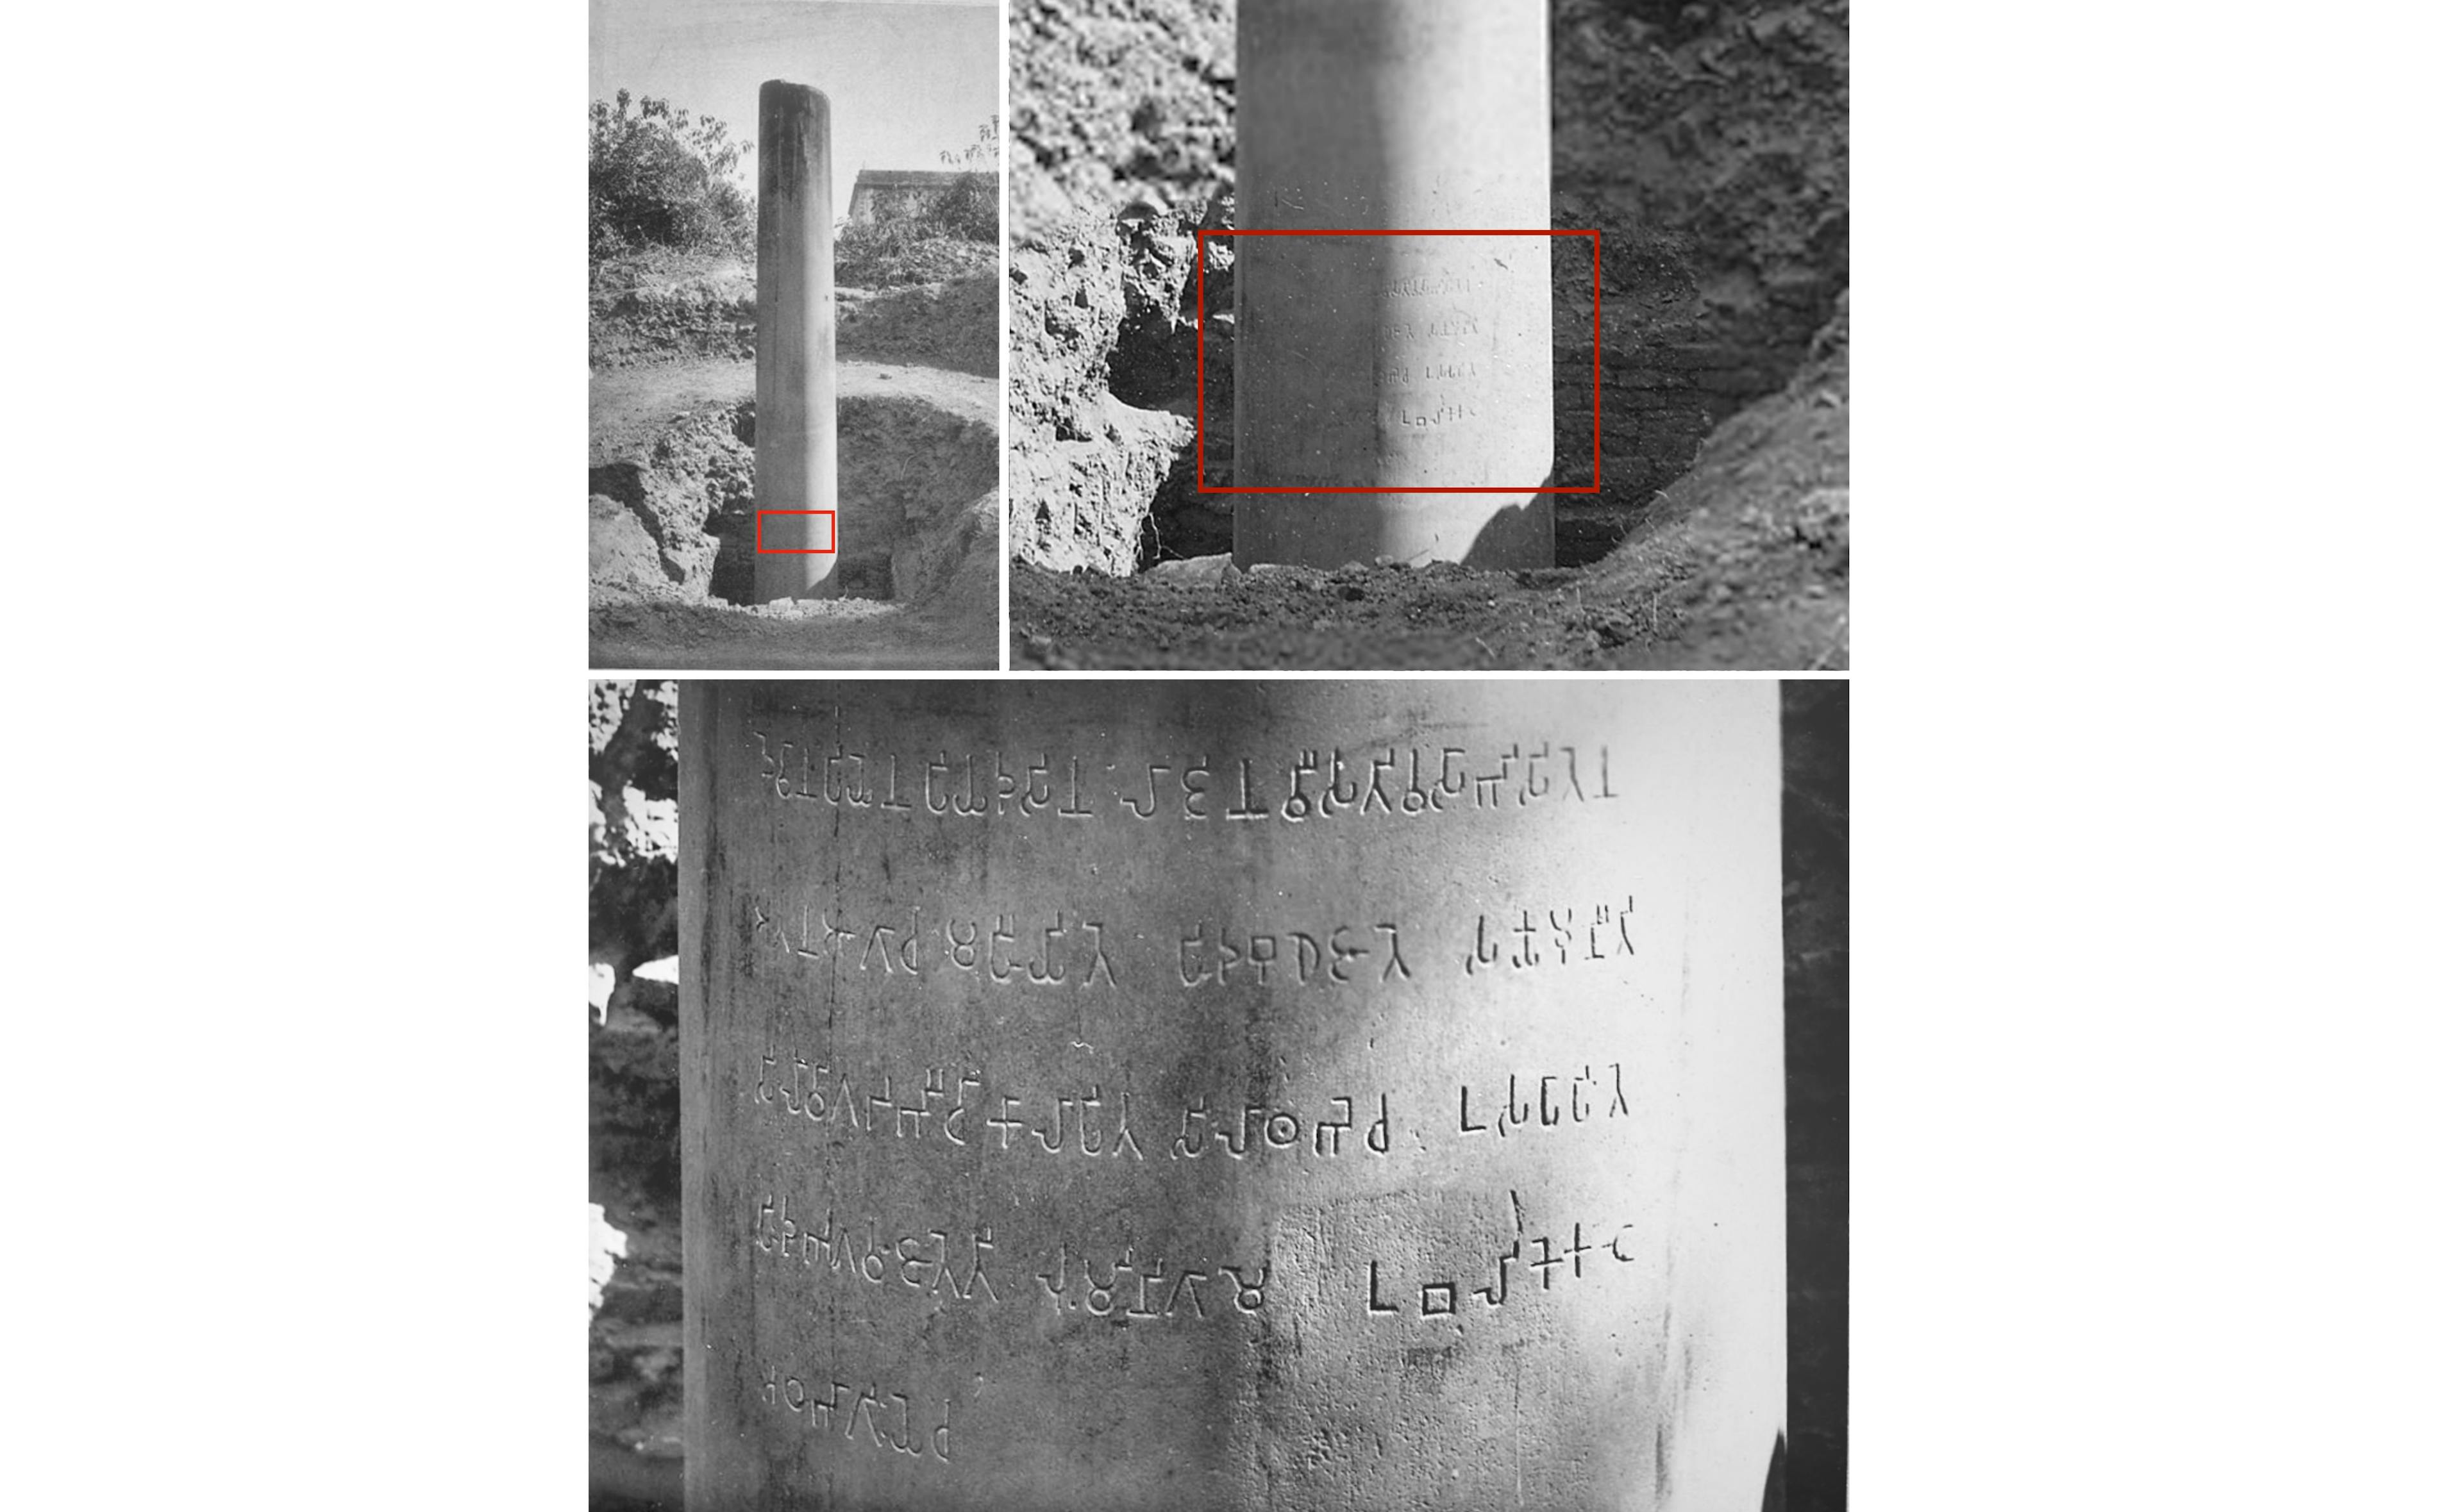 The Ashoka Pillar and its inscription